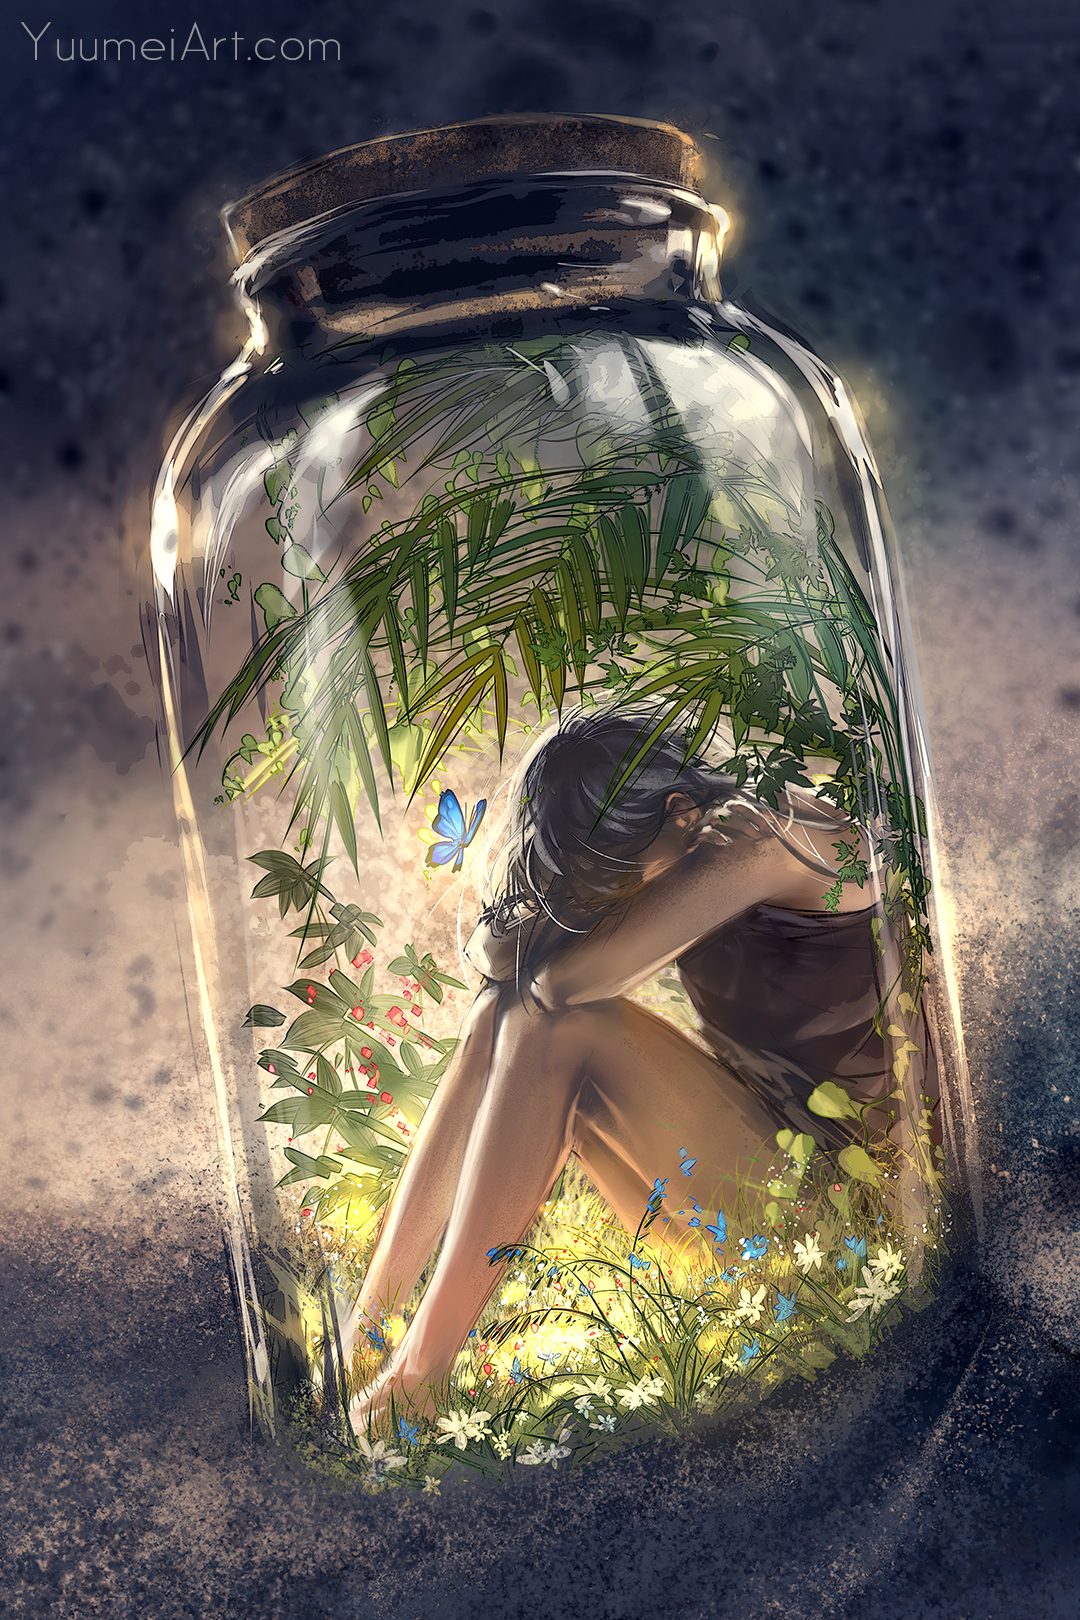 Yuumei Drawing Jar Women Crying Plants Butterflies Fantasy Art 1080x1620